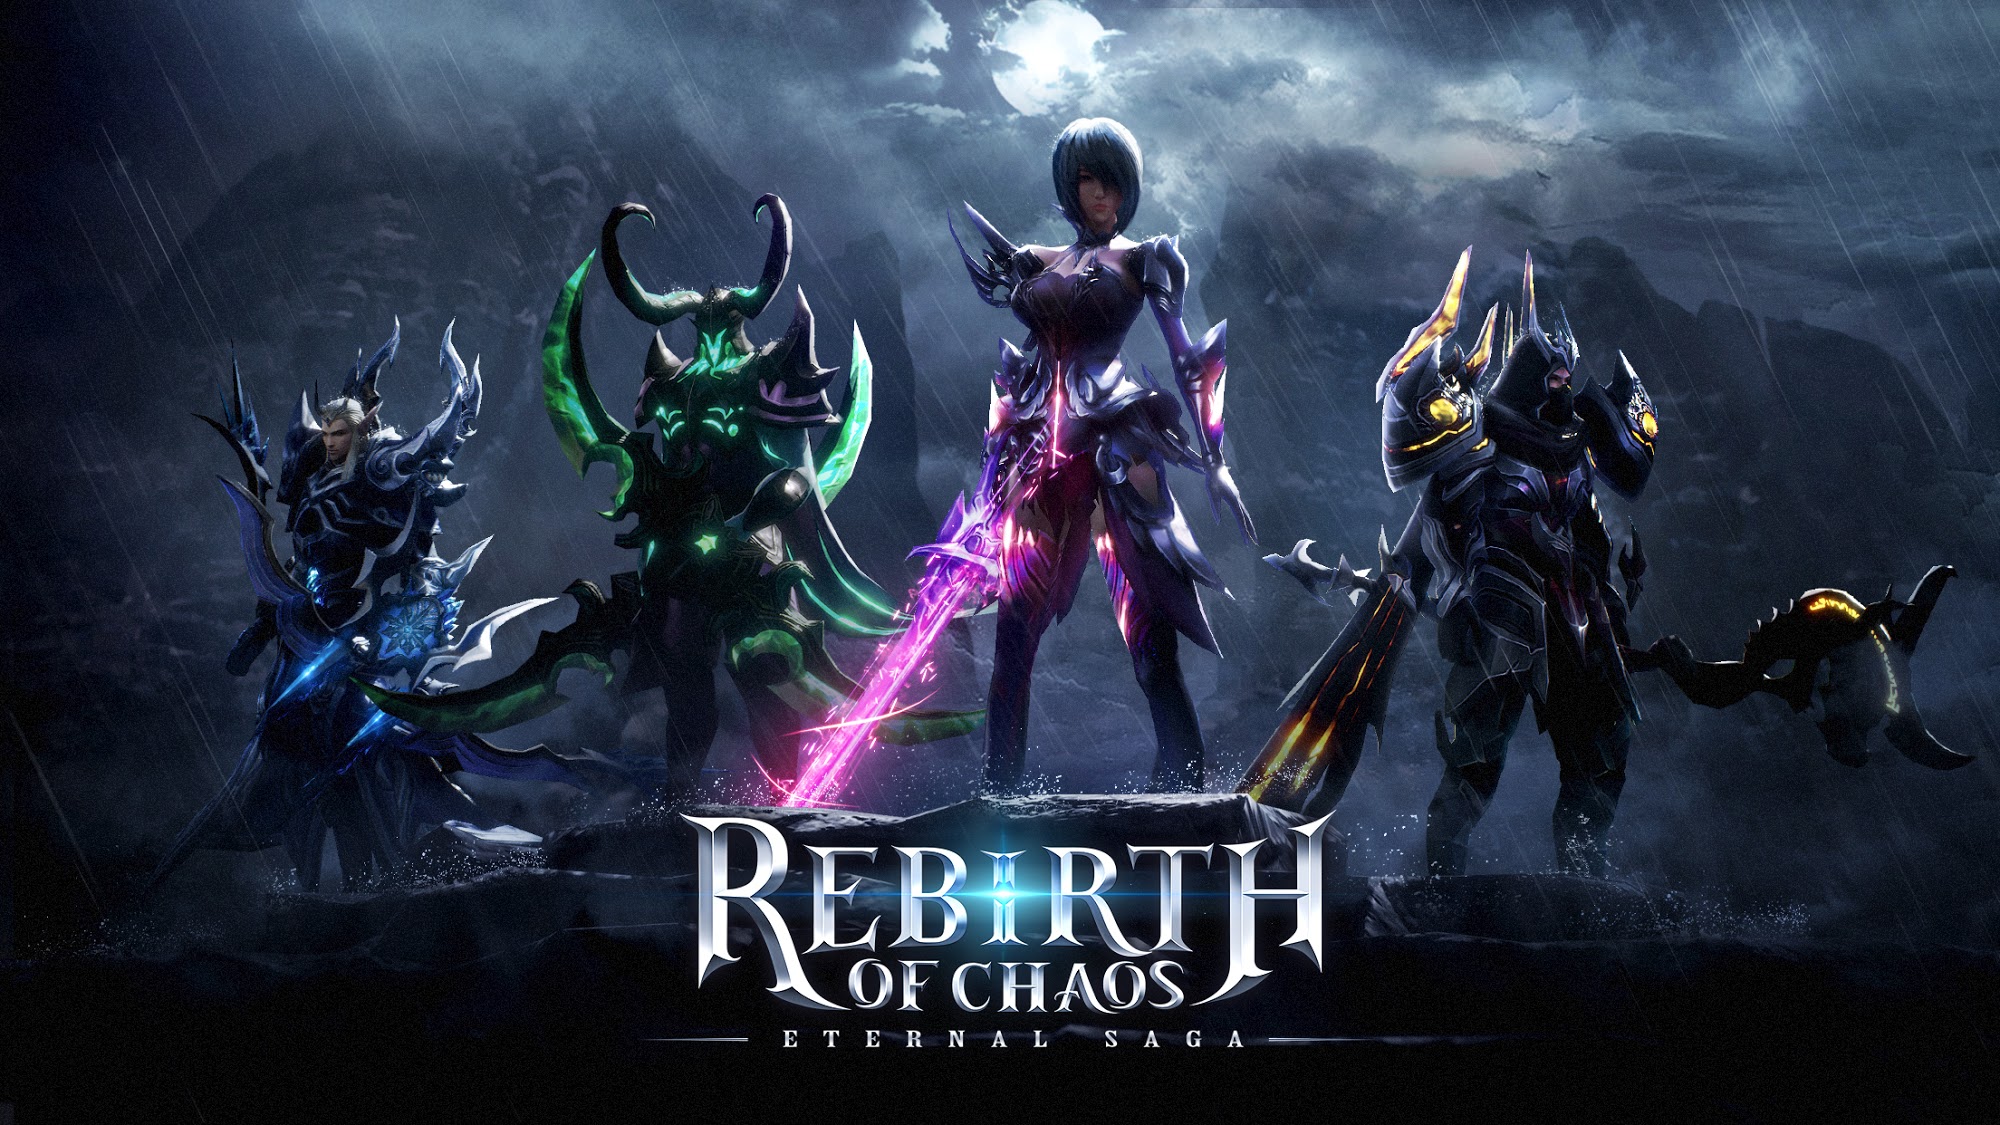 Download Rebirth of Chaos: Eternal saga Android free game.